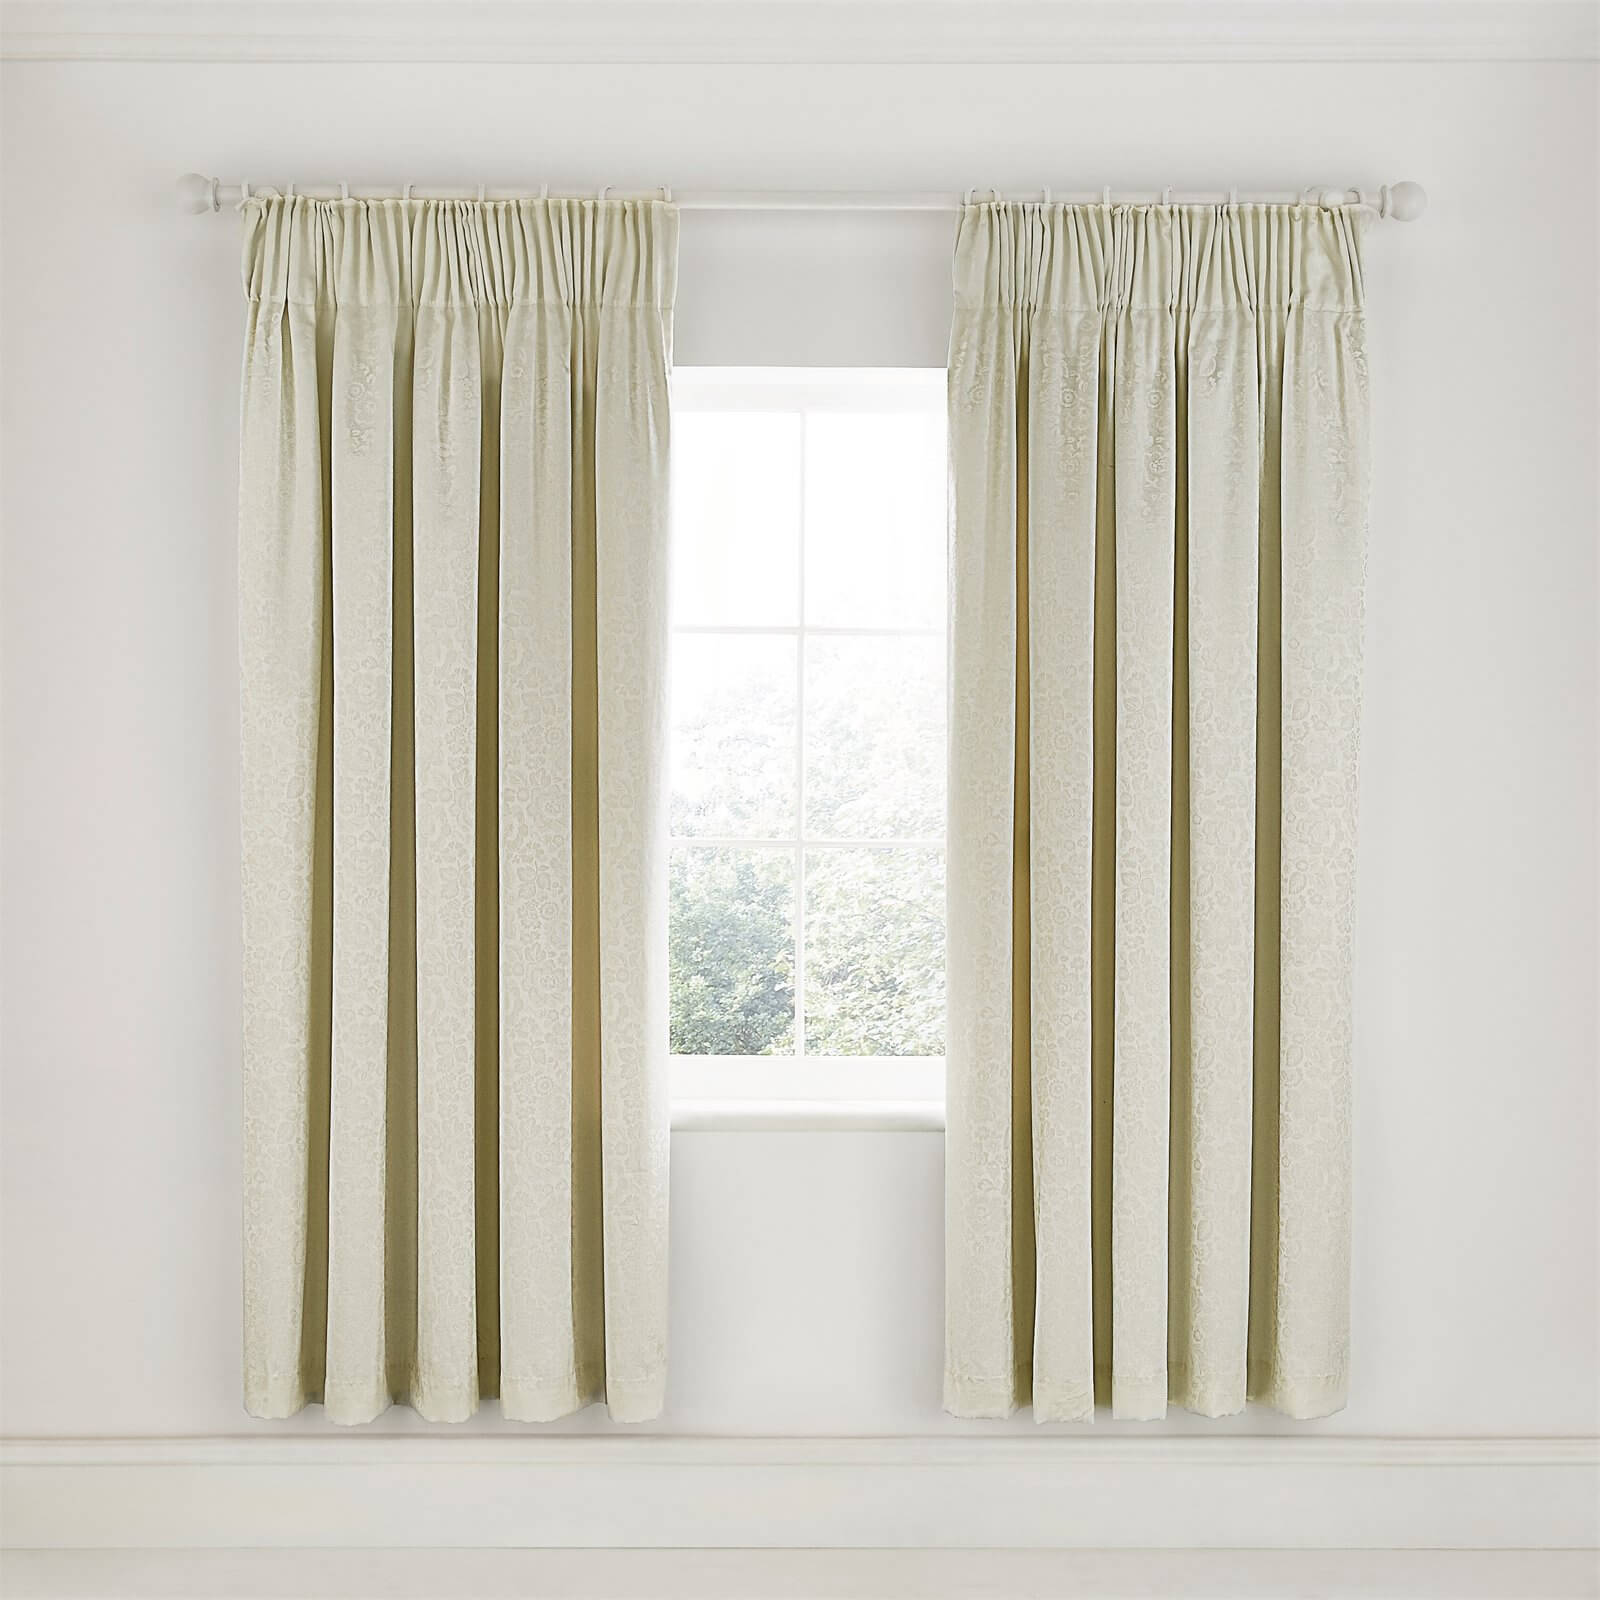 Helena Springfield Cassie Curtains 66 x 72 - Ivory